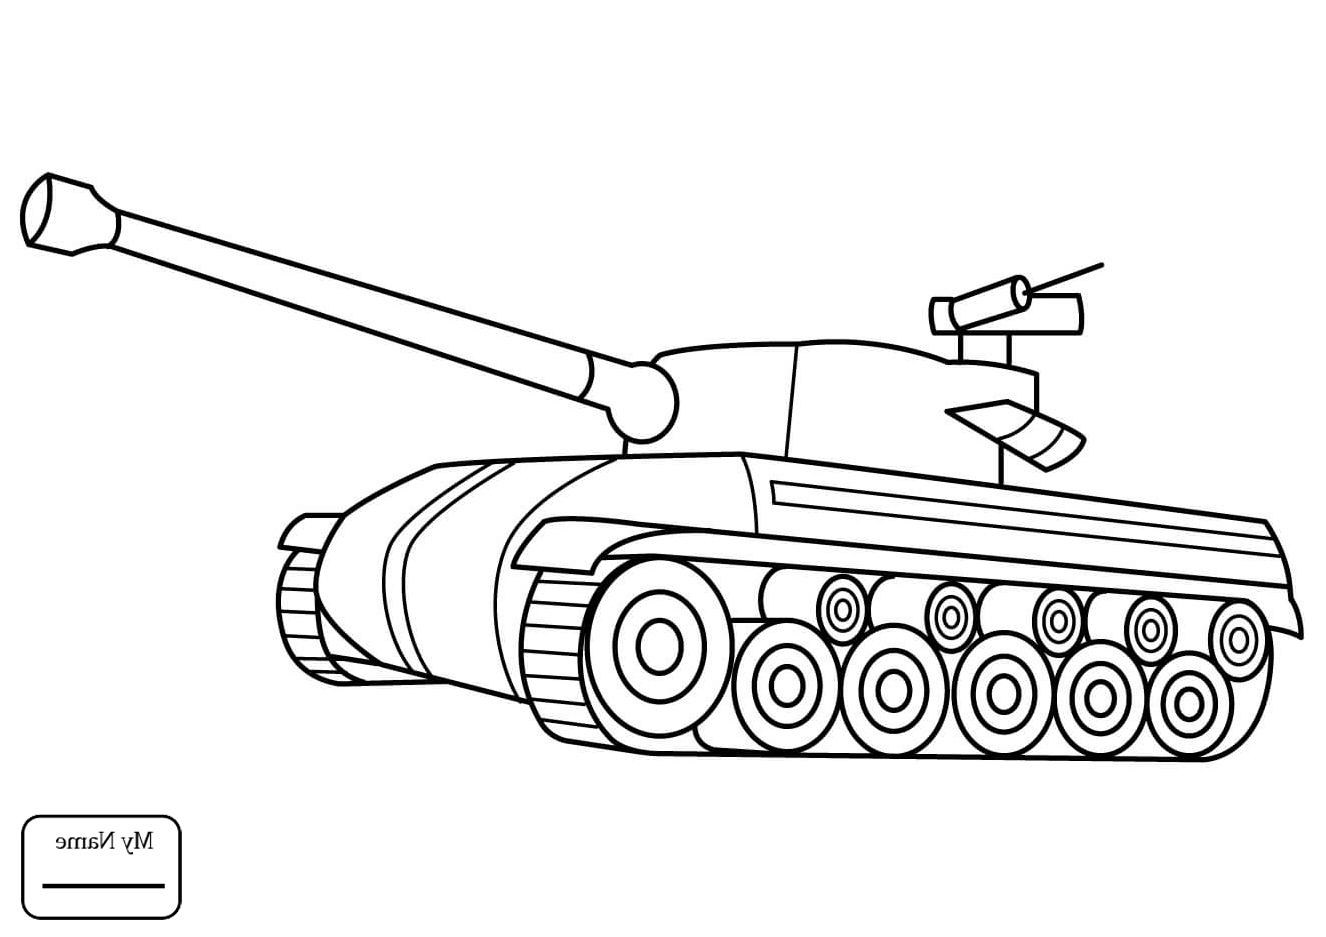 Andrew johnson how to draw a military tank - mglaha